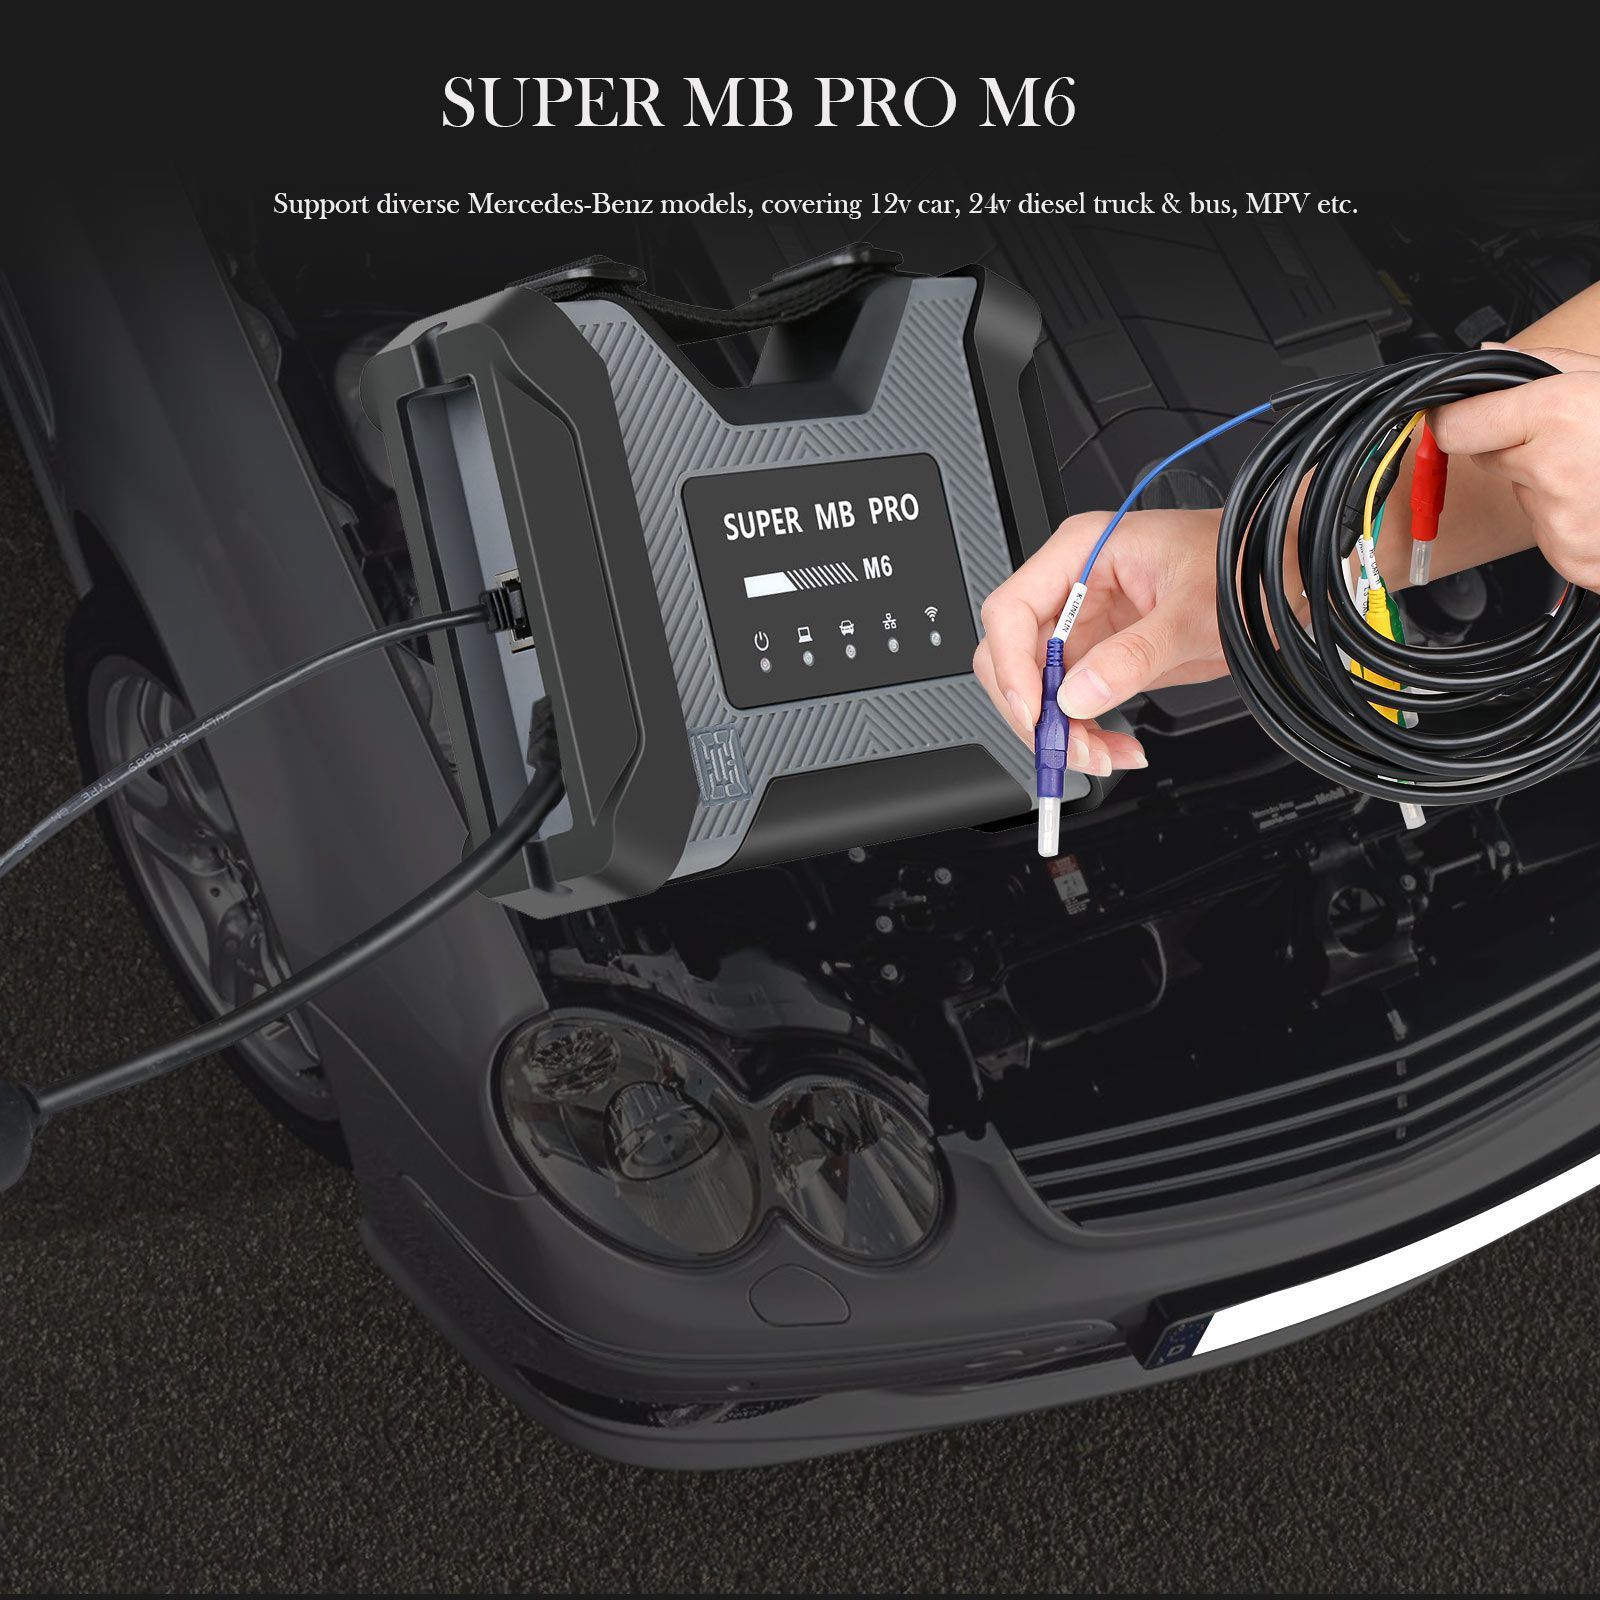 Super MB Pro M6 para BENZ Caminhões Diagnósticos Ferramenta de Diagnóstico Sem Fio + OBD2 16Pin Cable + Lan Cable + 14Pin Cable